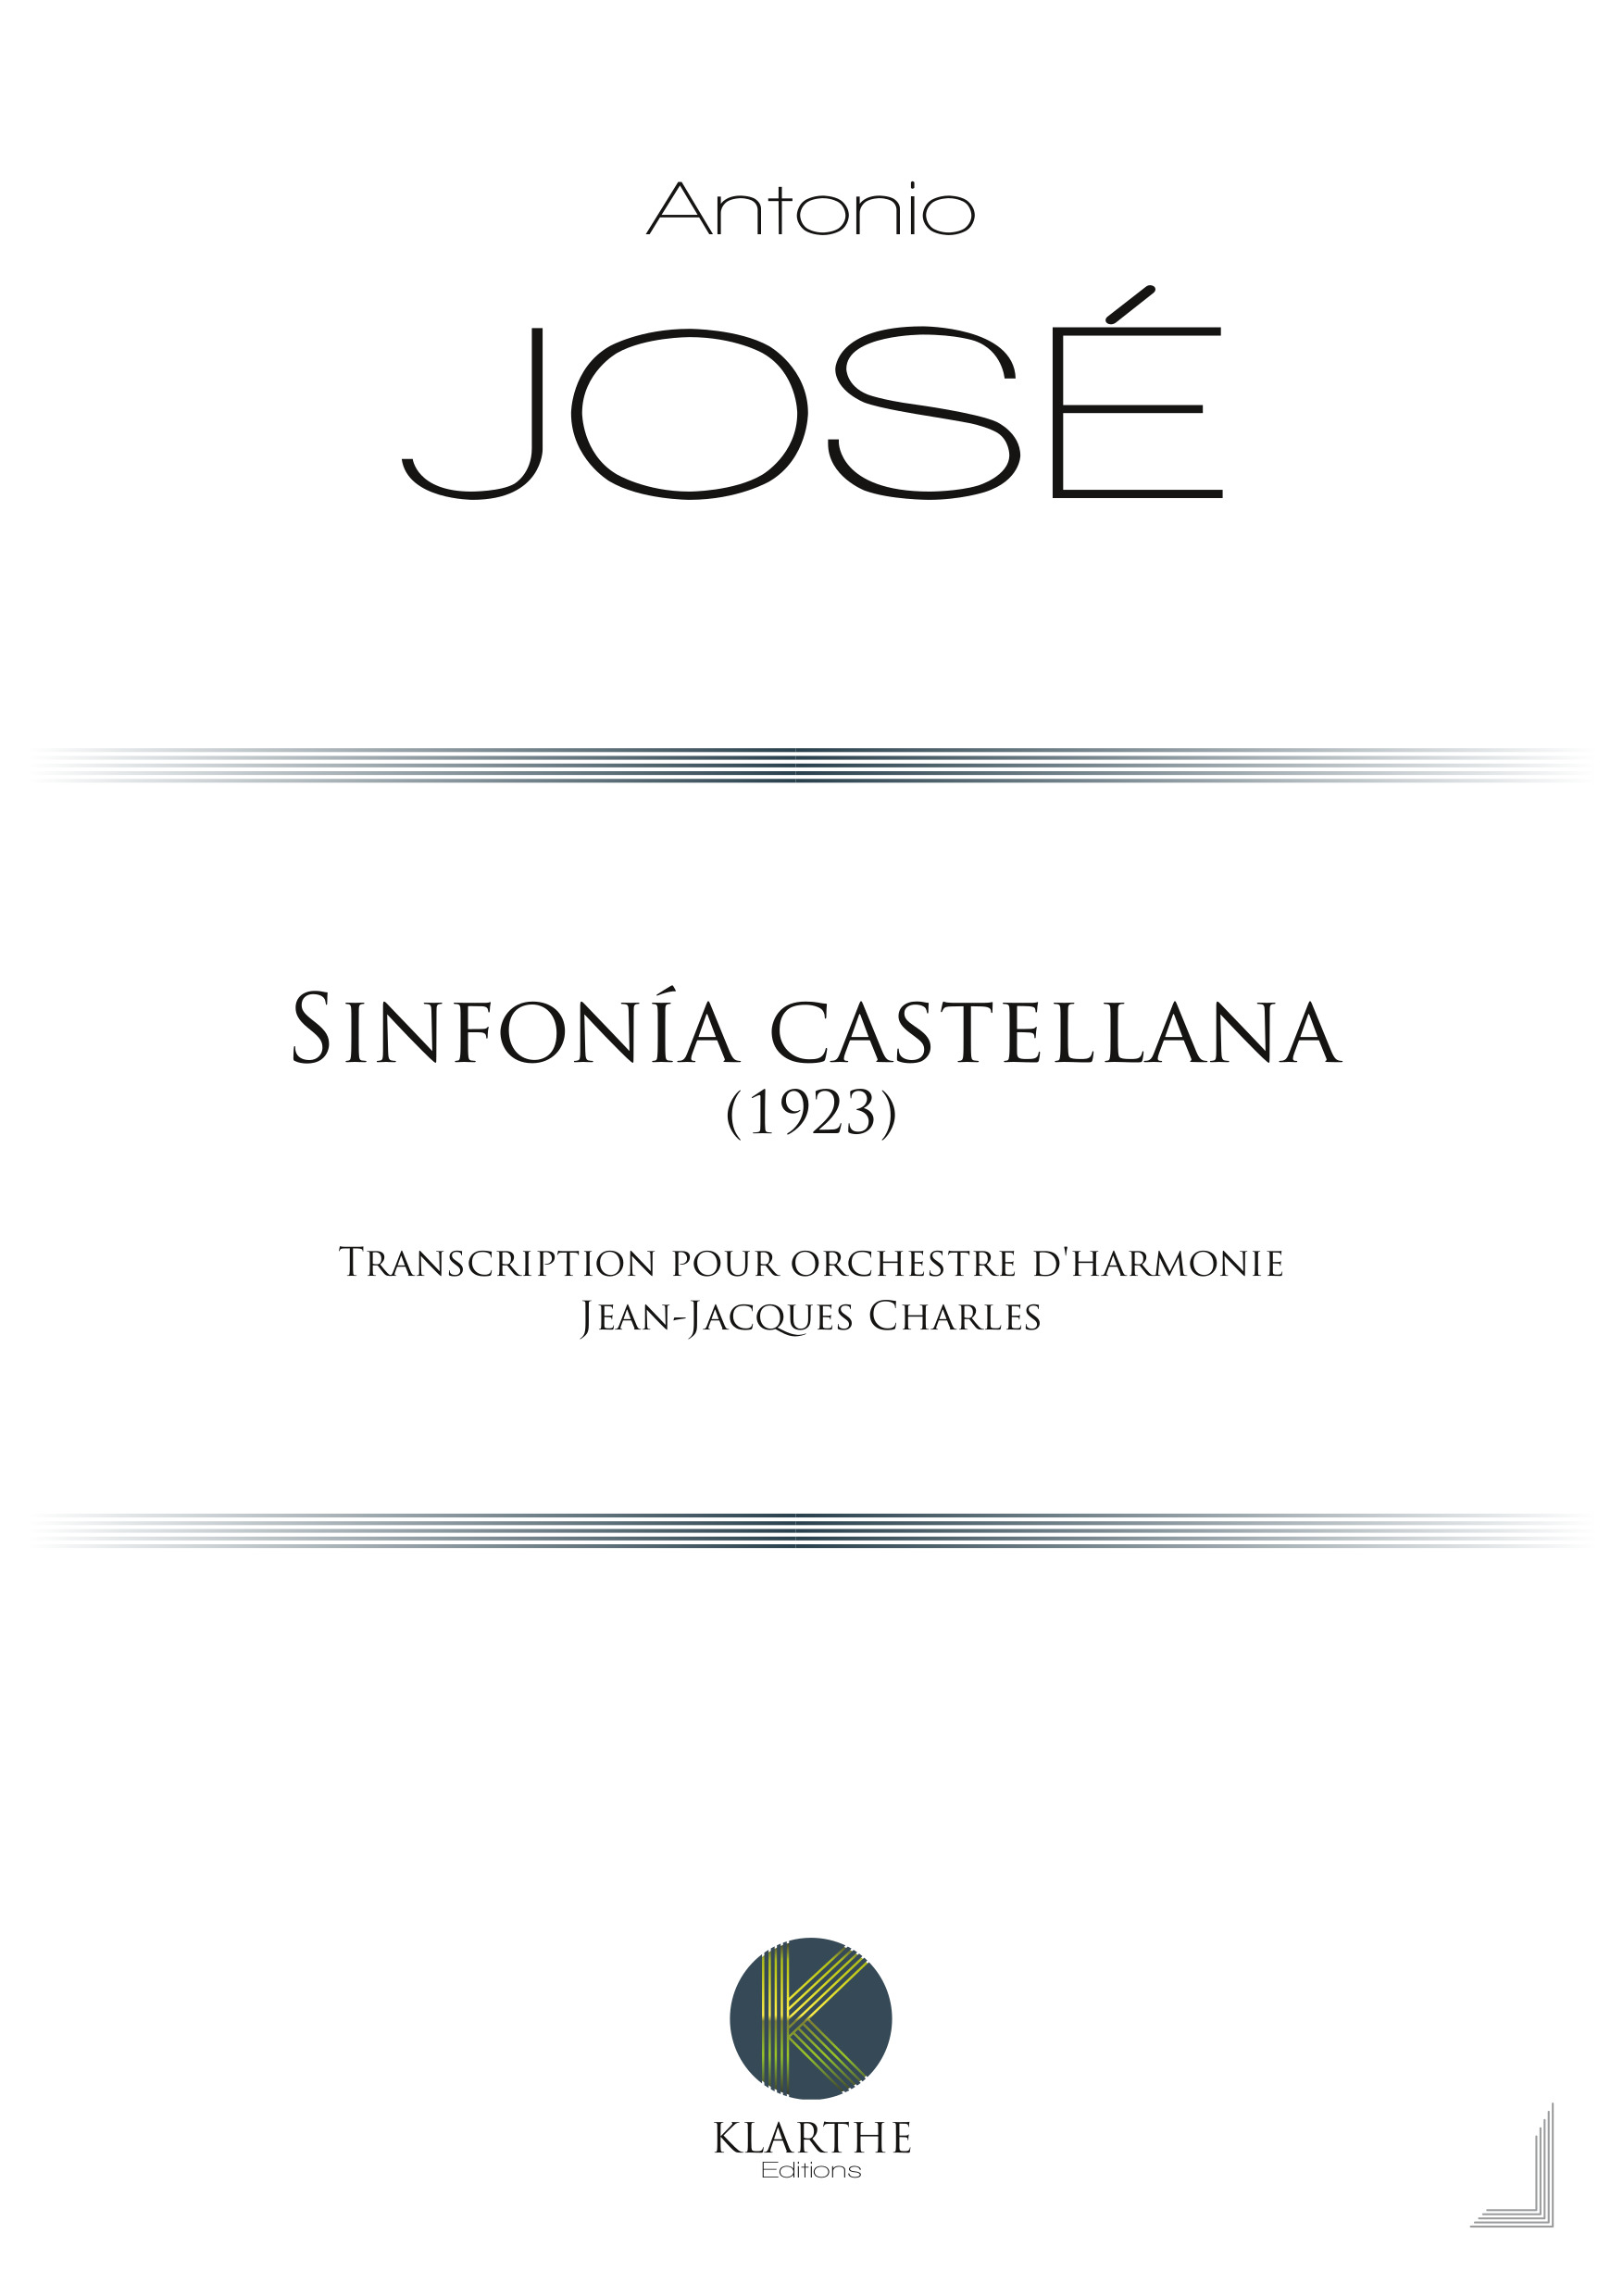 Sinfonía Castellana (ANTONIO JOSE)